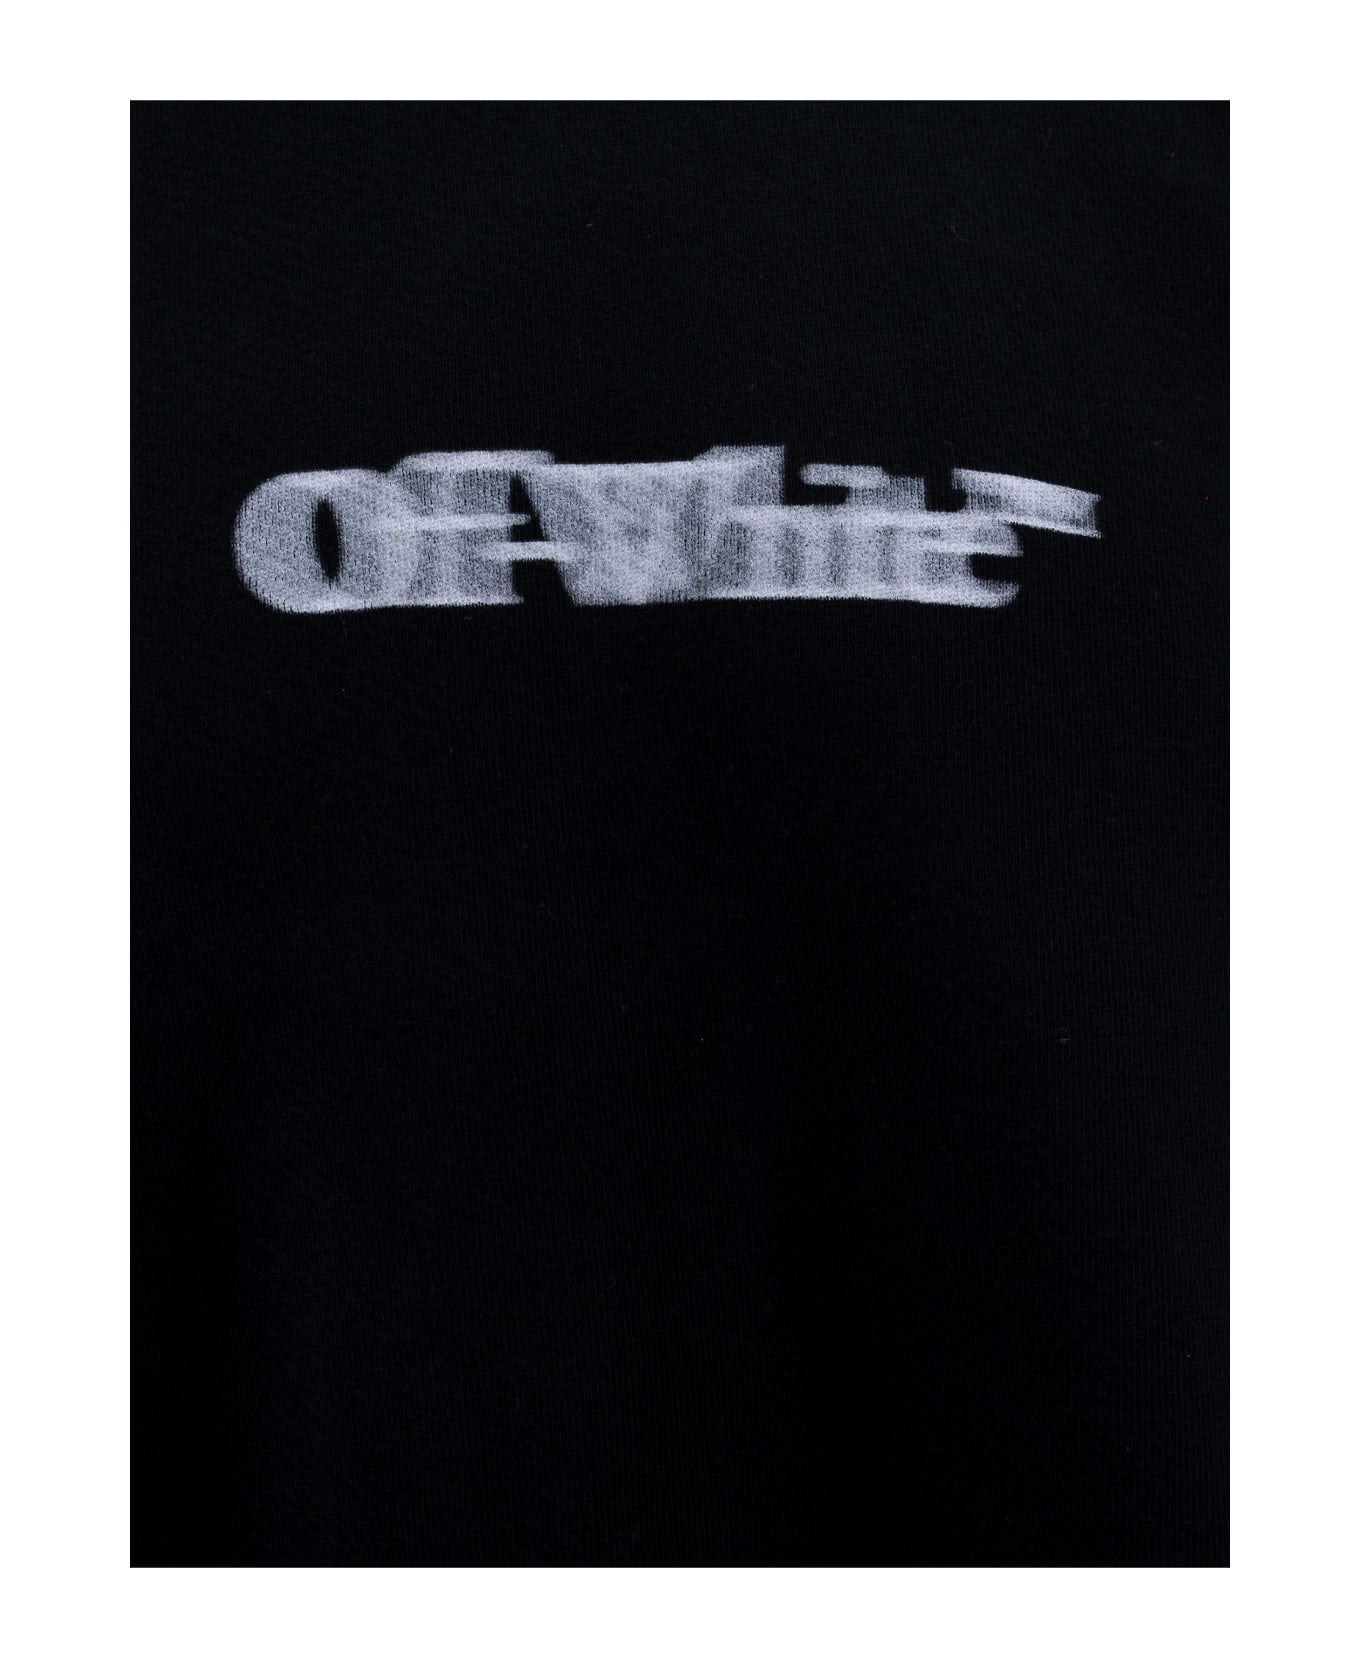 Off-White Sweatshirt - Black